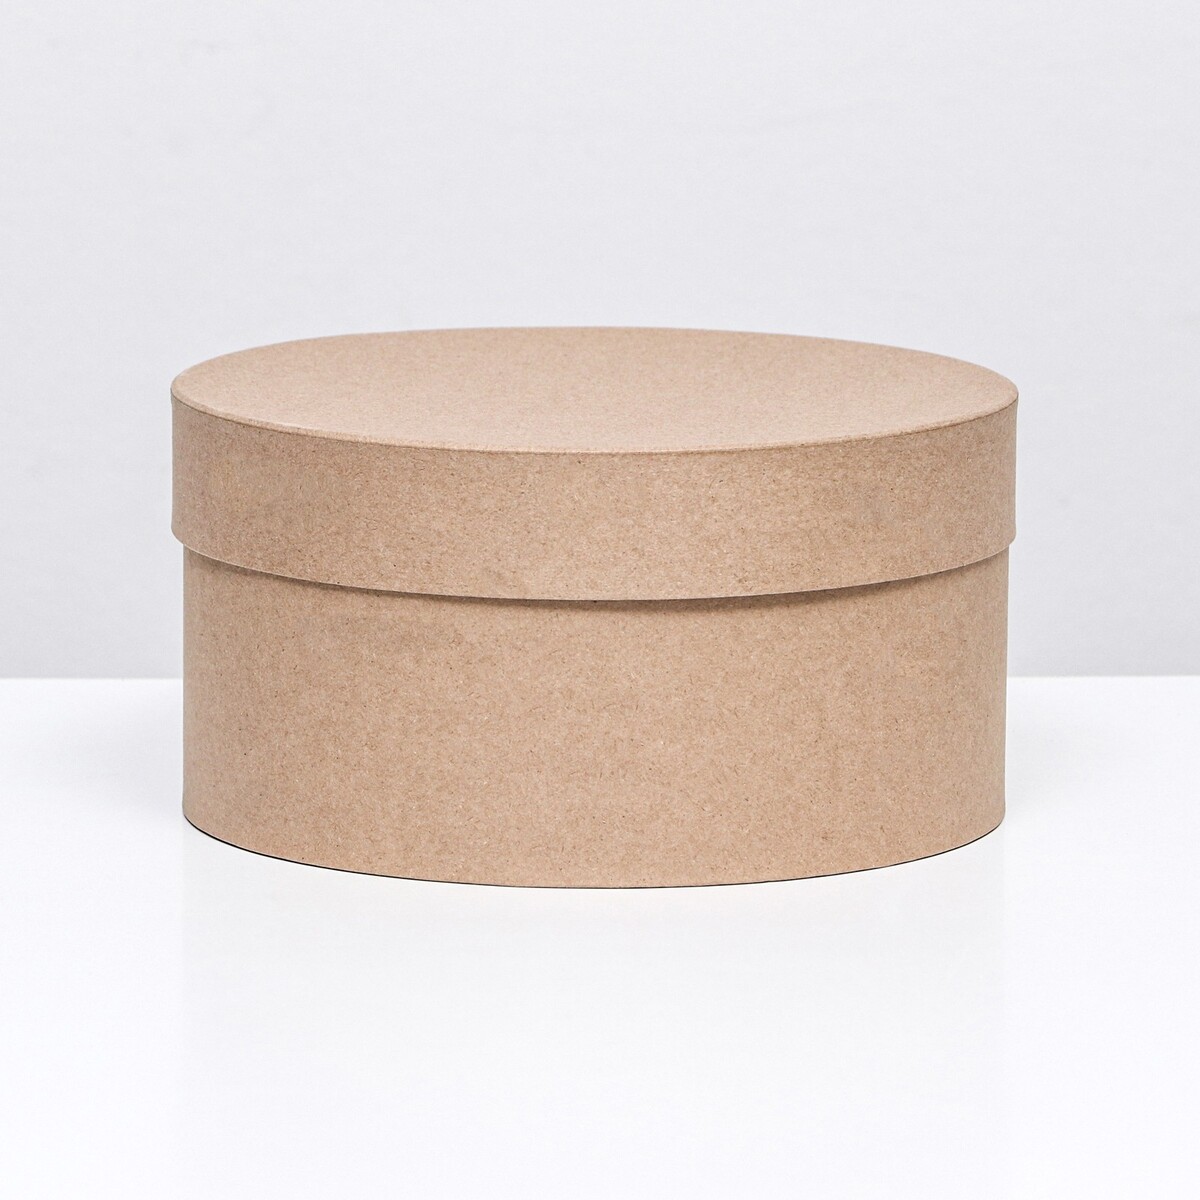 Коробка круглая крафт, 25 х12 см